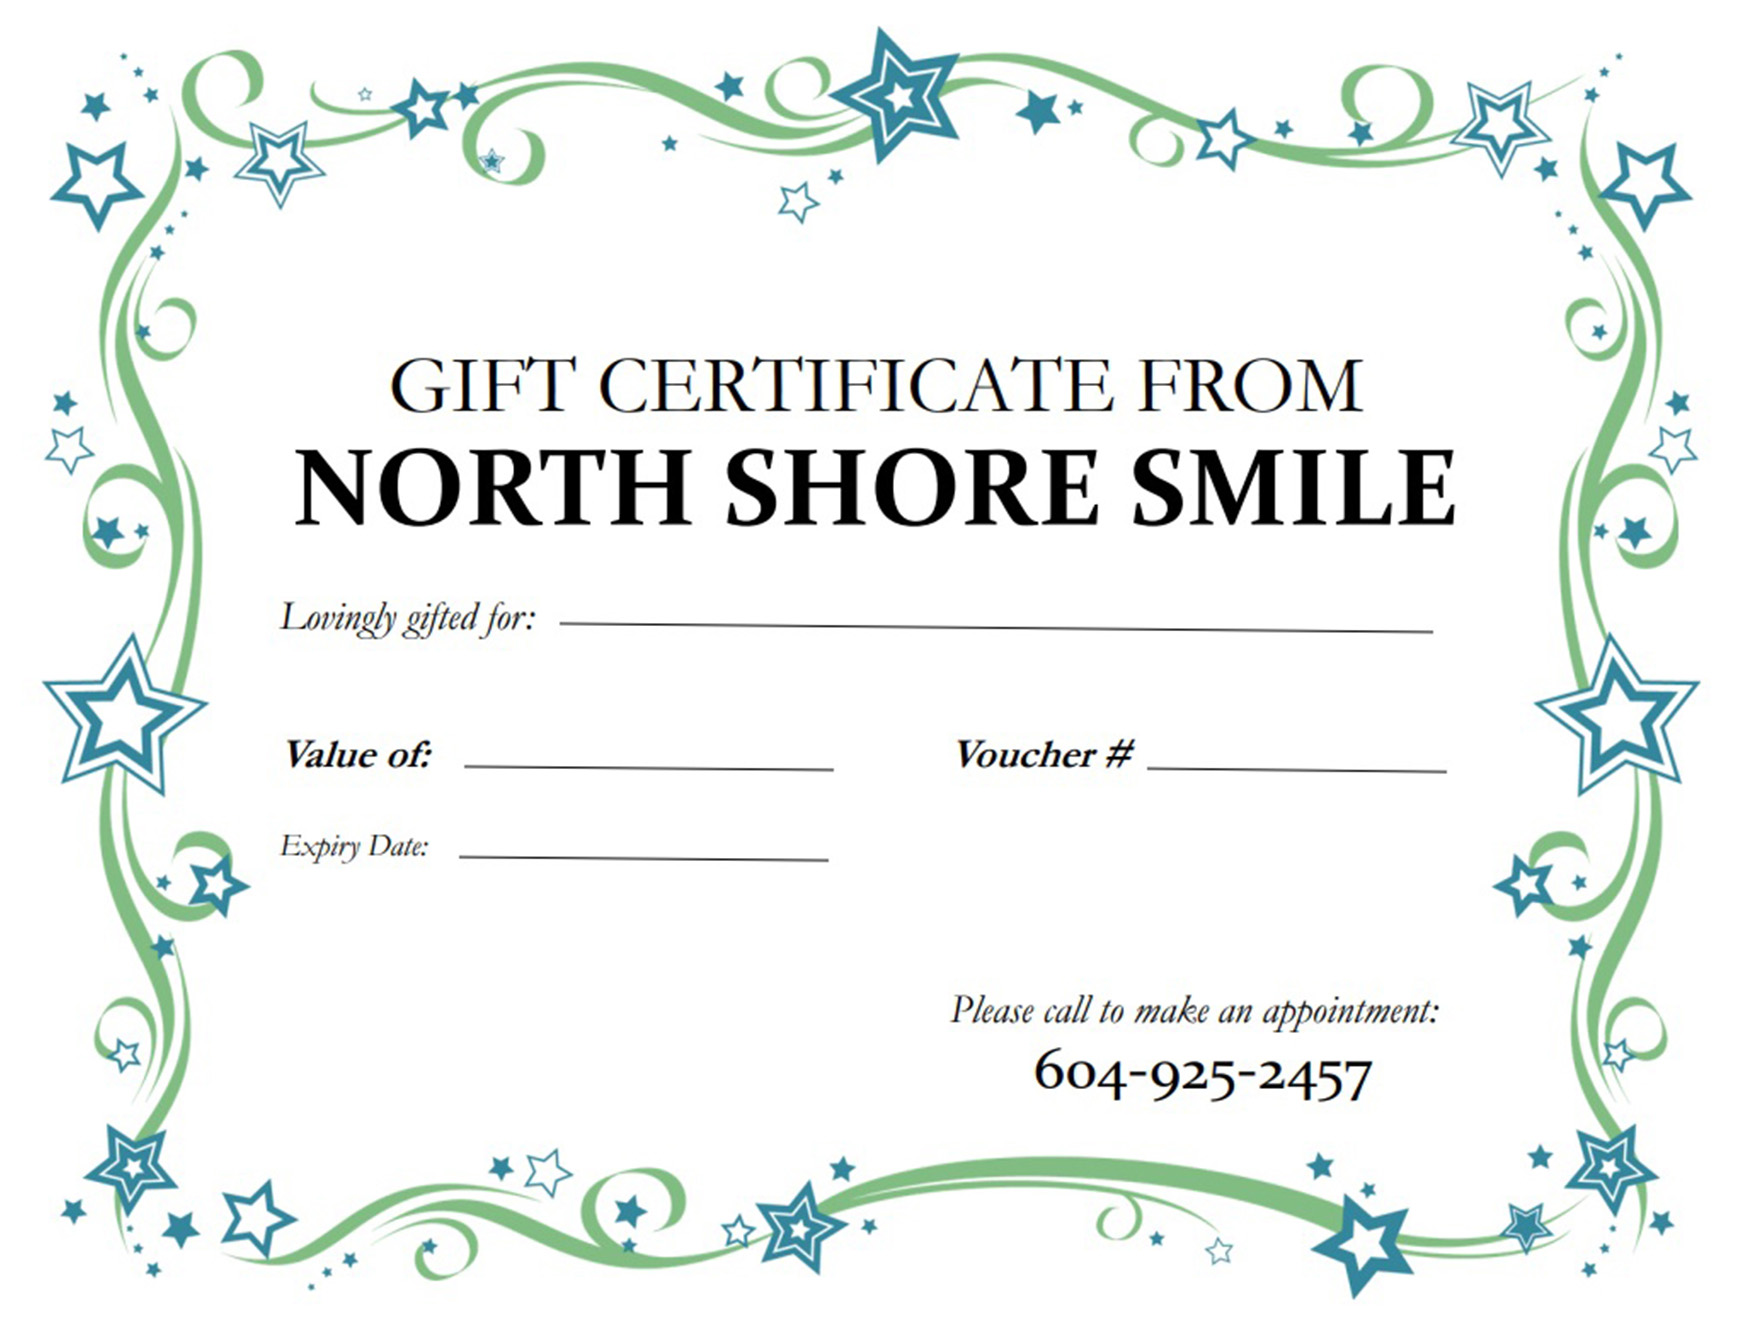 Gift Certificate voucher sample